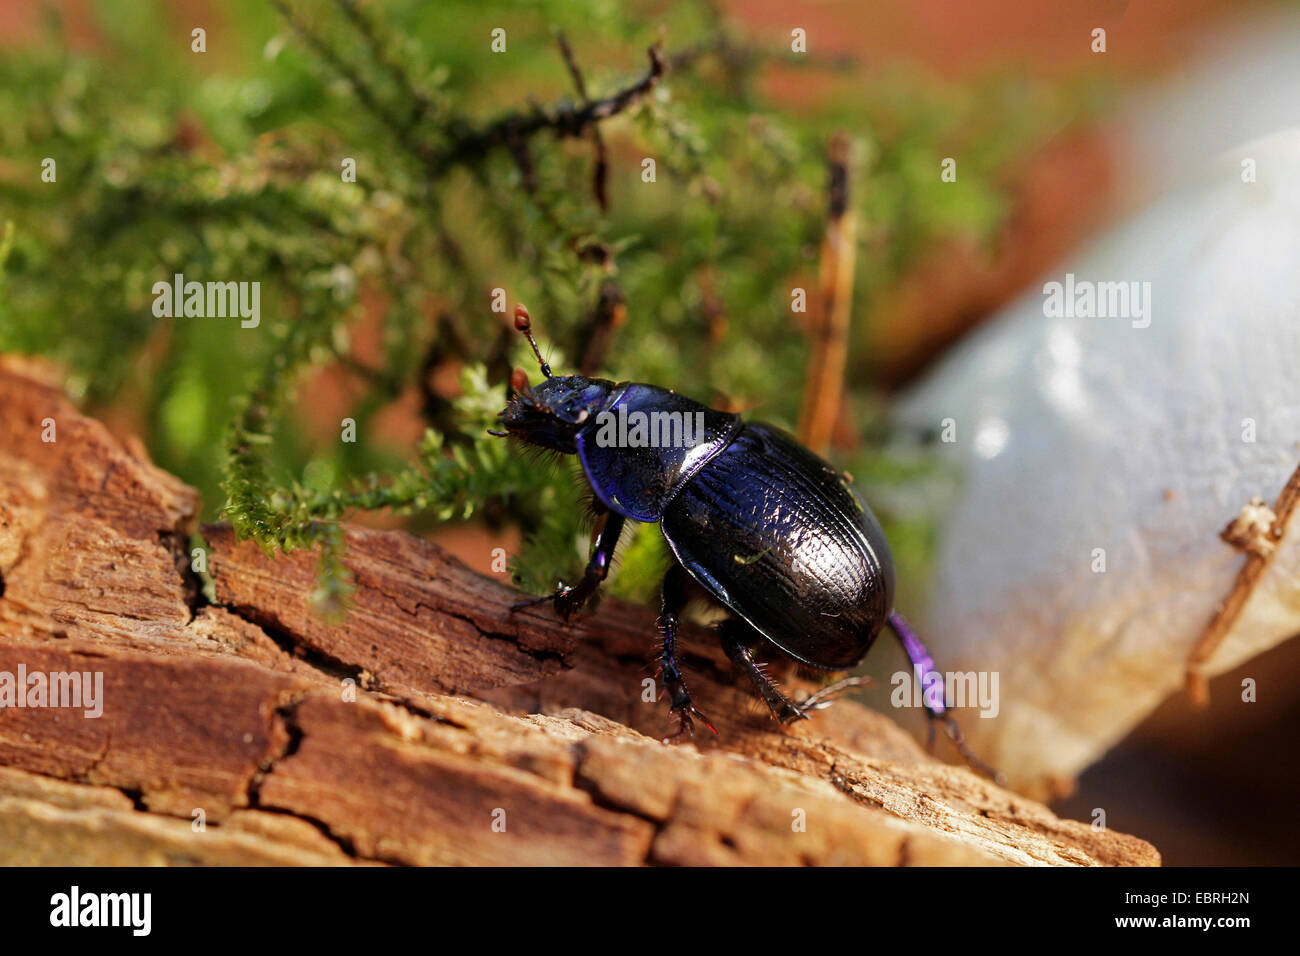 Common dor beetle (Anoplotrupes stercorosus, Geotrupes stercorosus), on deadwood, Germany Stock Photo